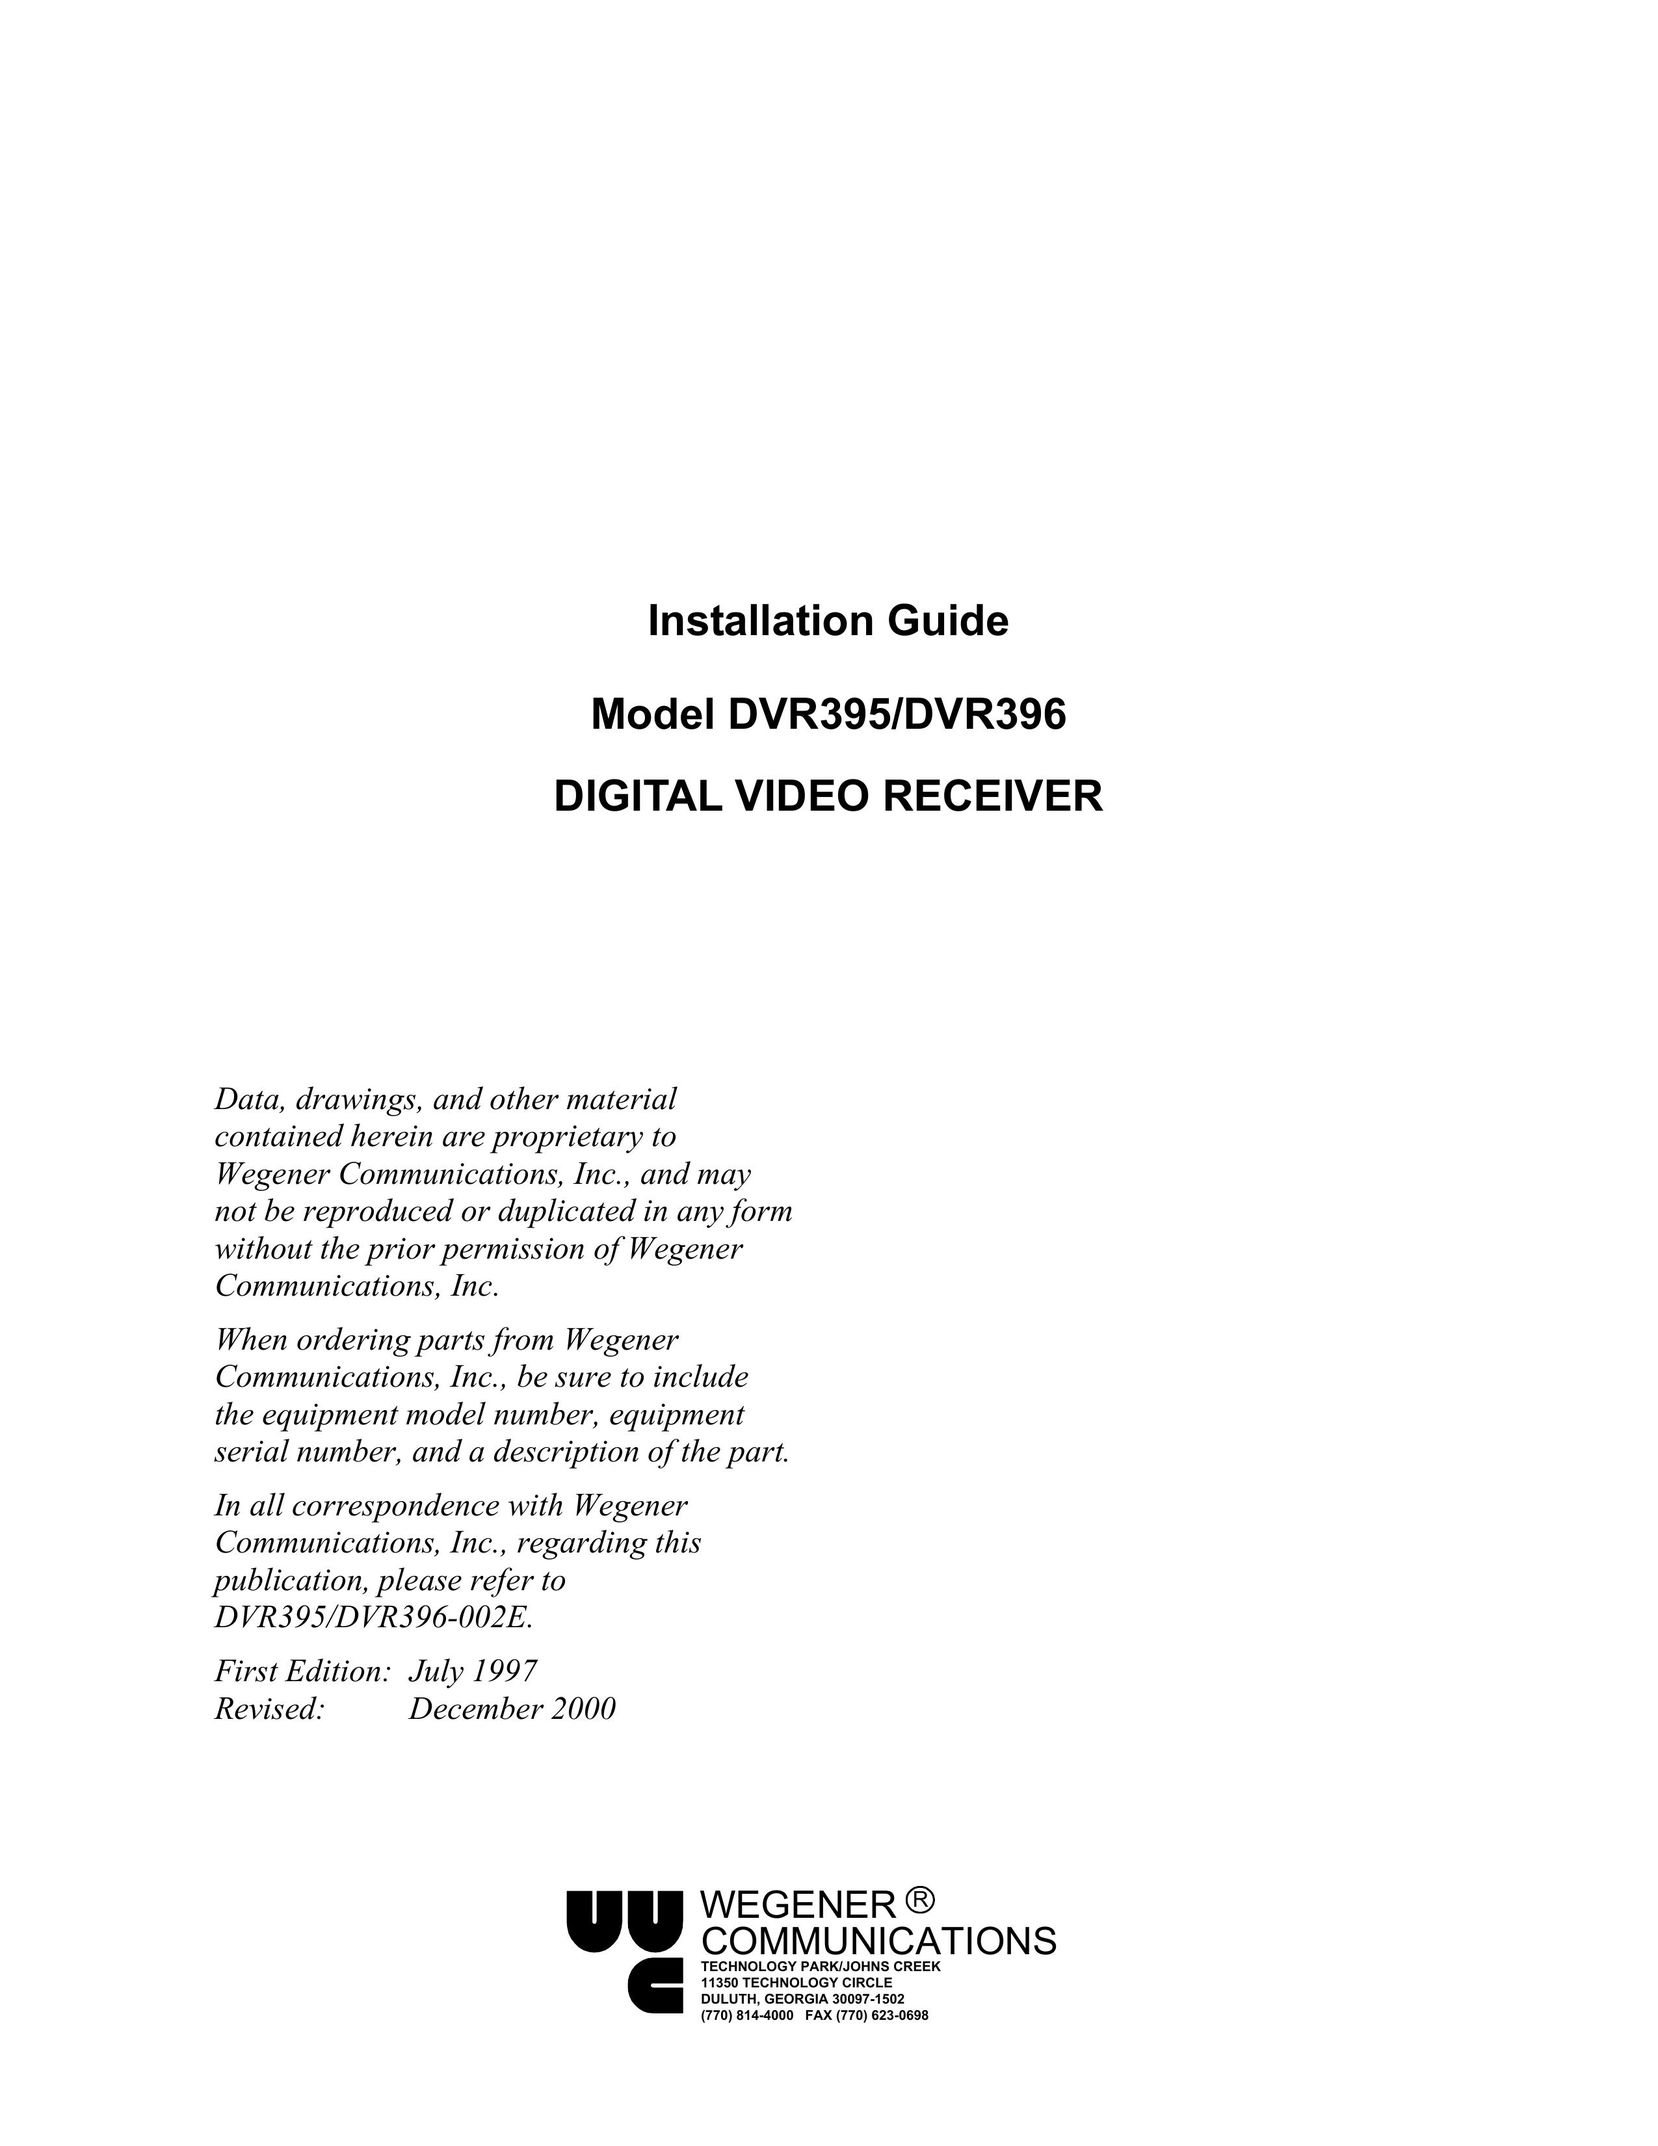 Wegener Communications DVR396 Stereo Receiver User Manual